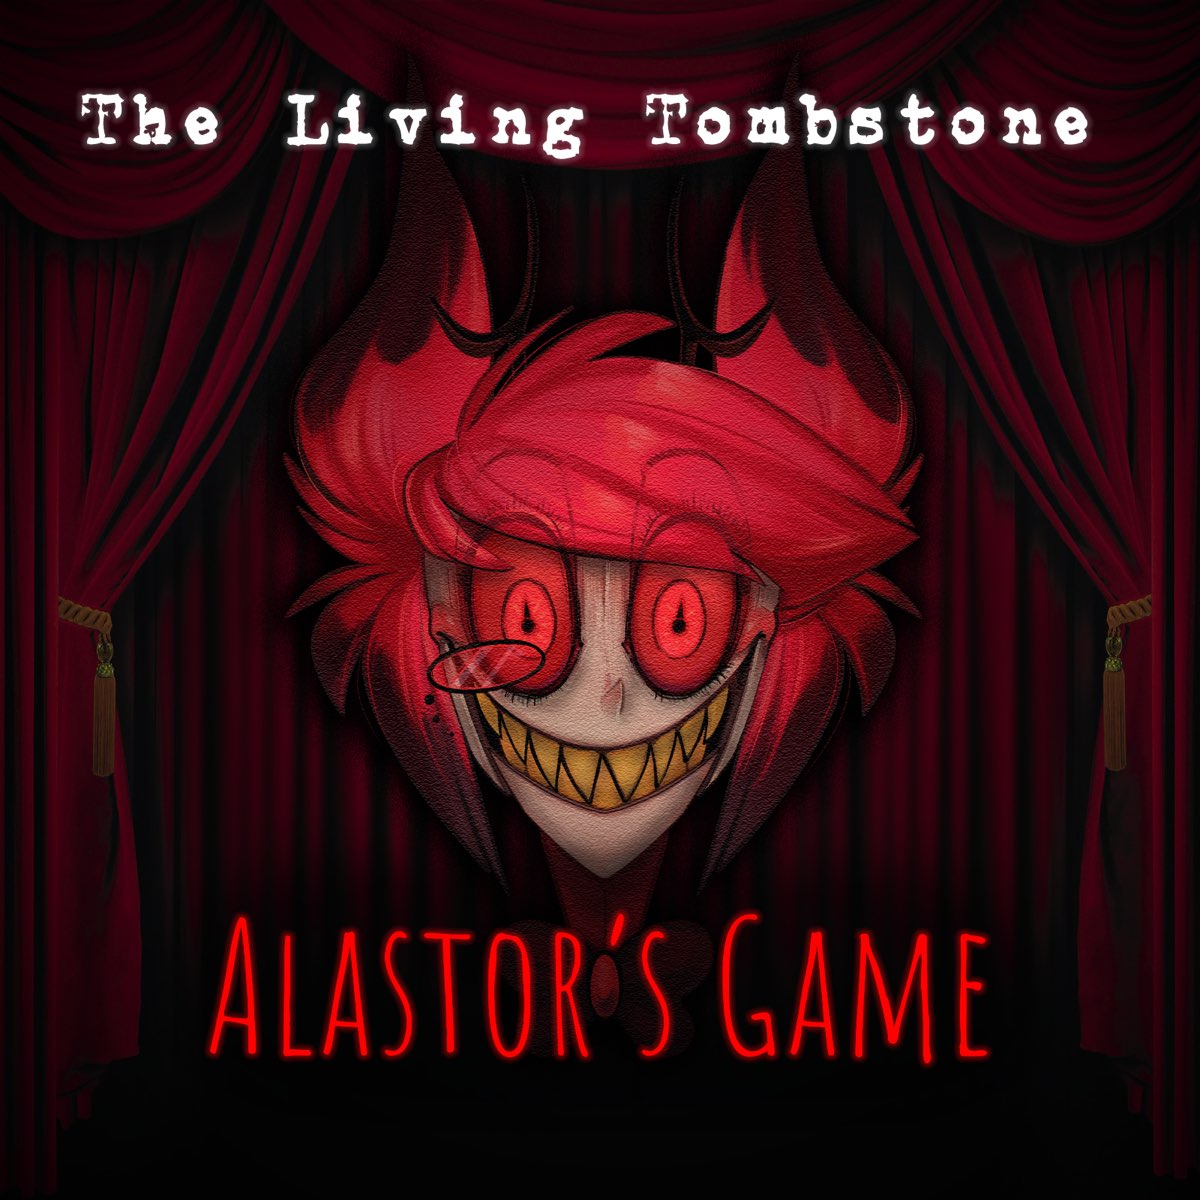 Песня аластора и люцифера на английском. Аластор the Living Tombstone. Alastor game the Living Tombstone. Alastor s game the Living Tombstone. The Living Tombstone текст.